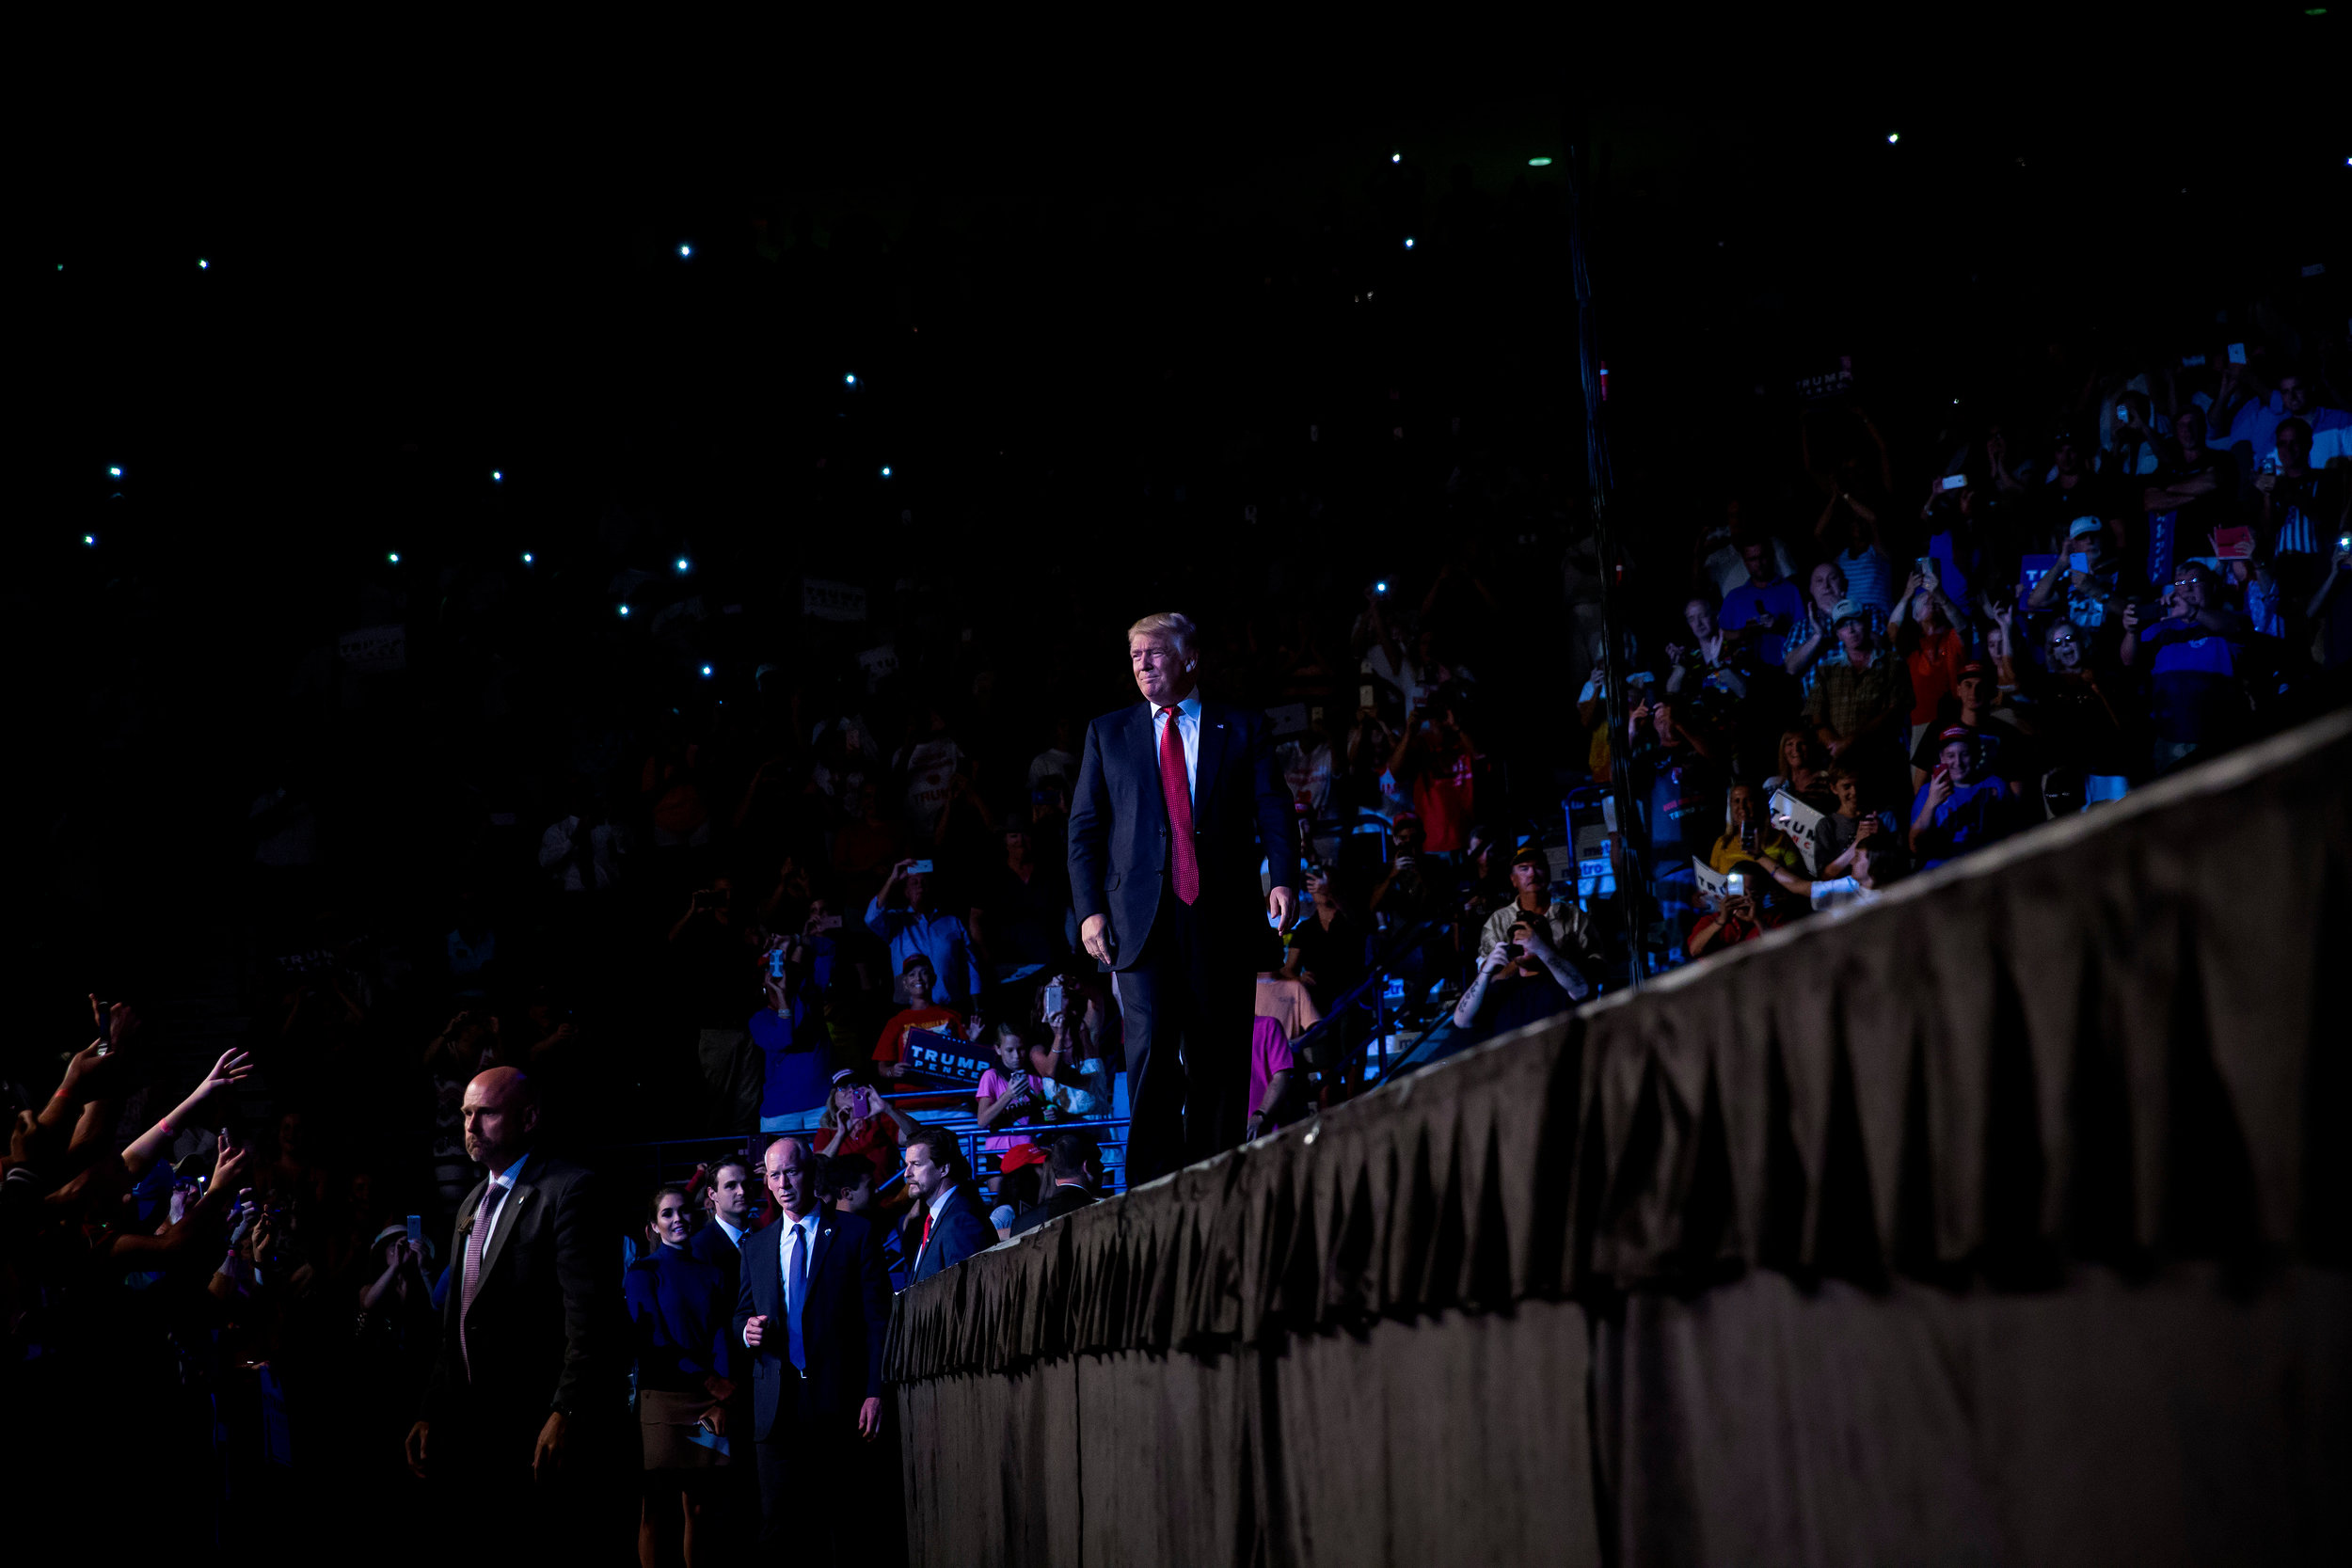   Donald Trump. Fort Myers, FL. 2016  